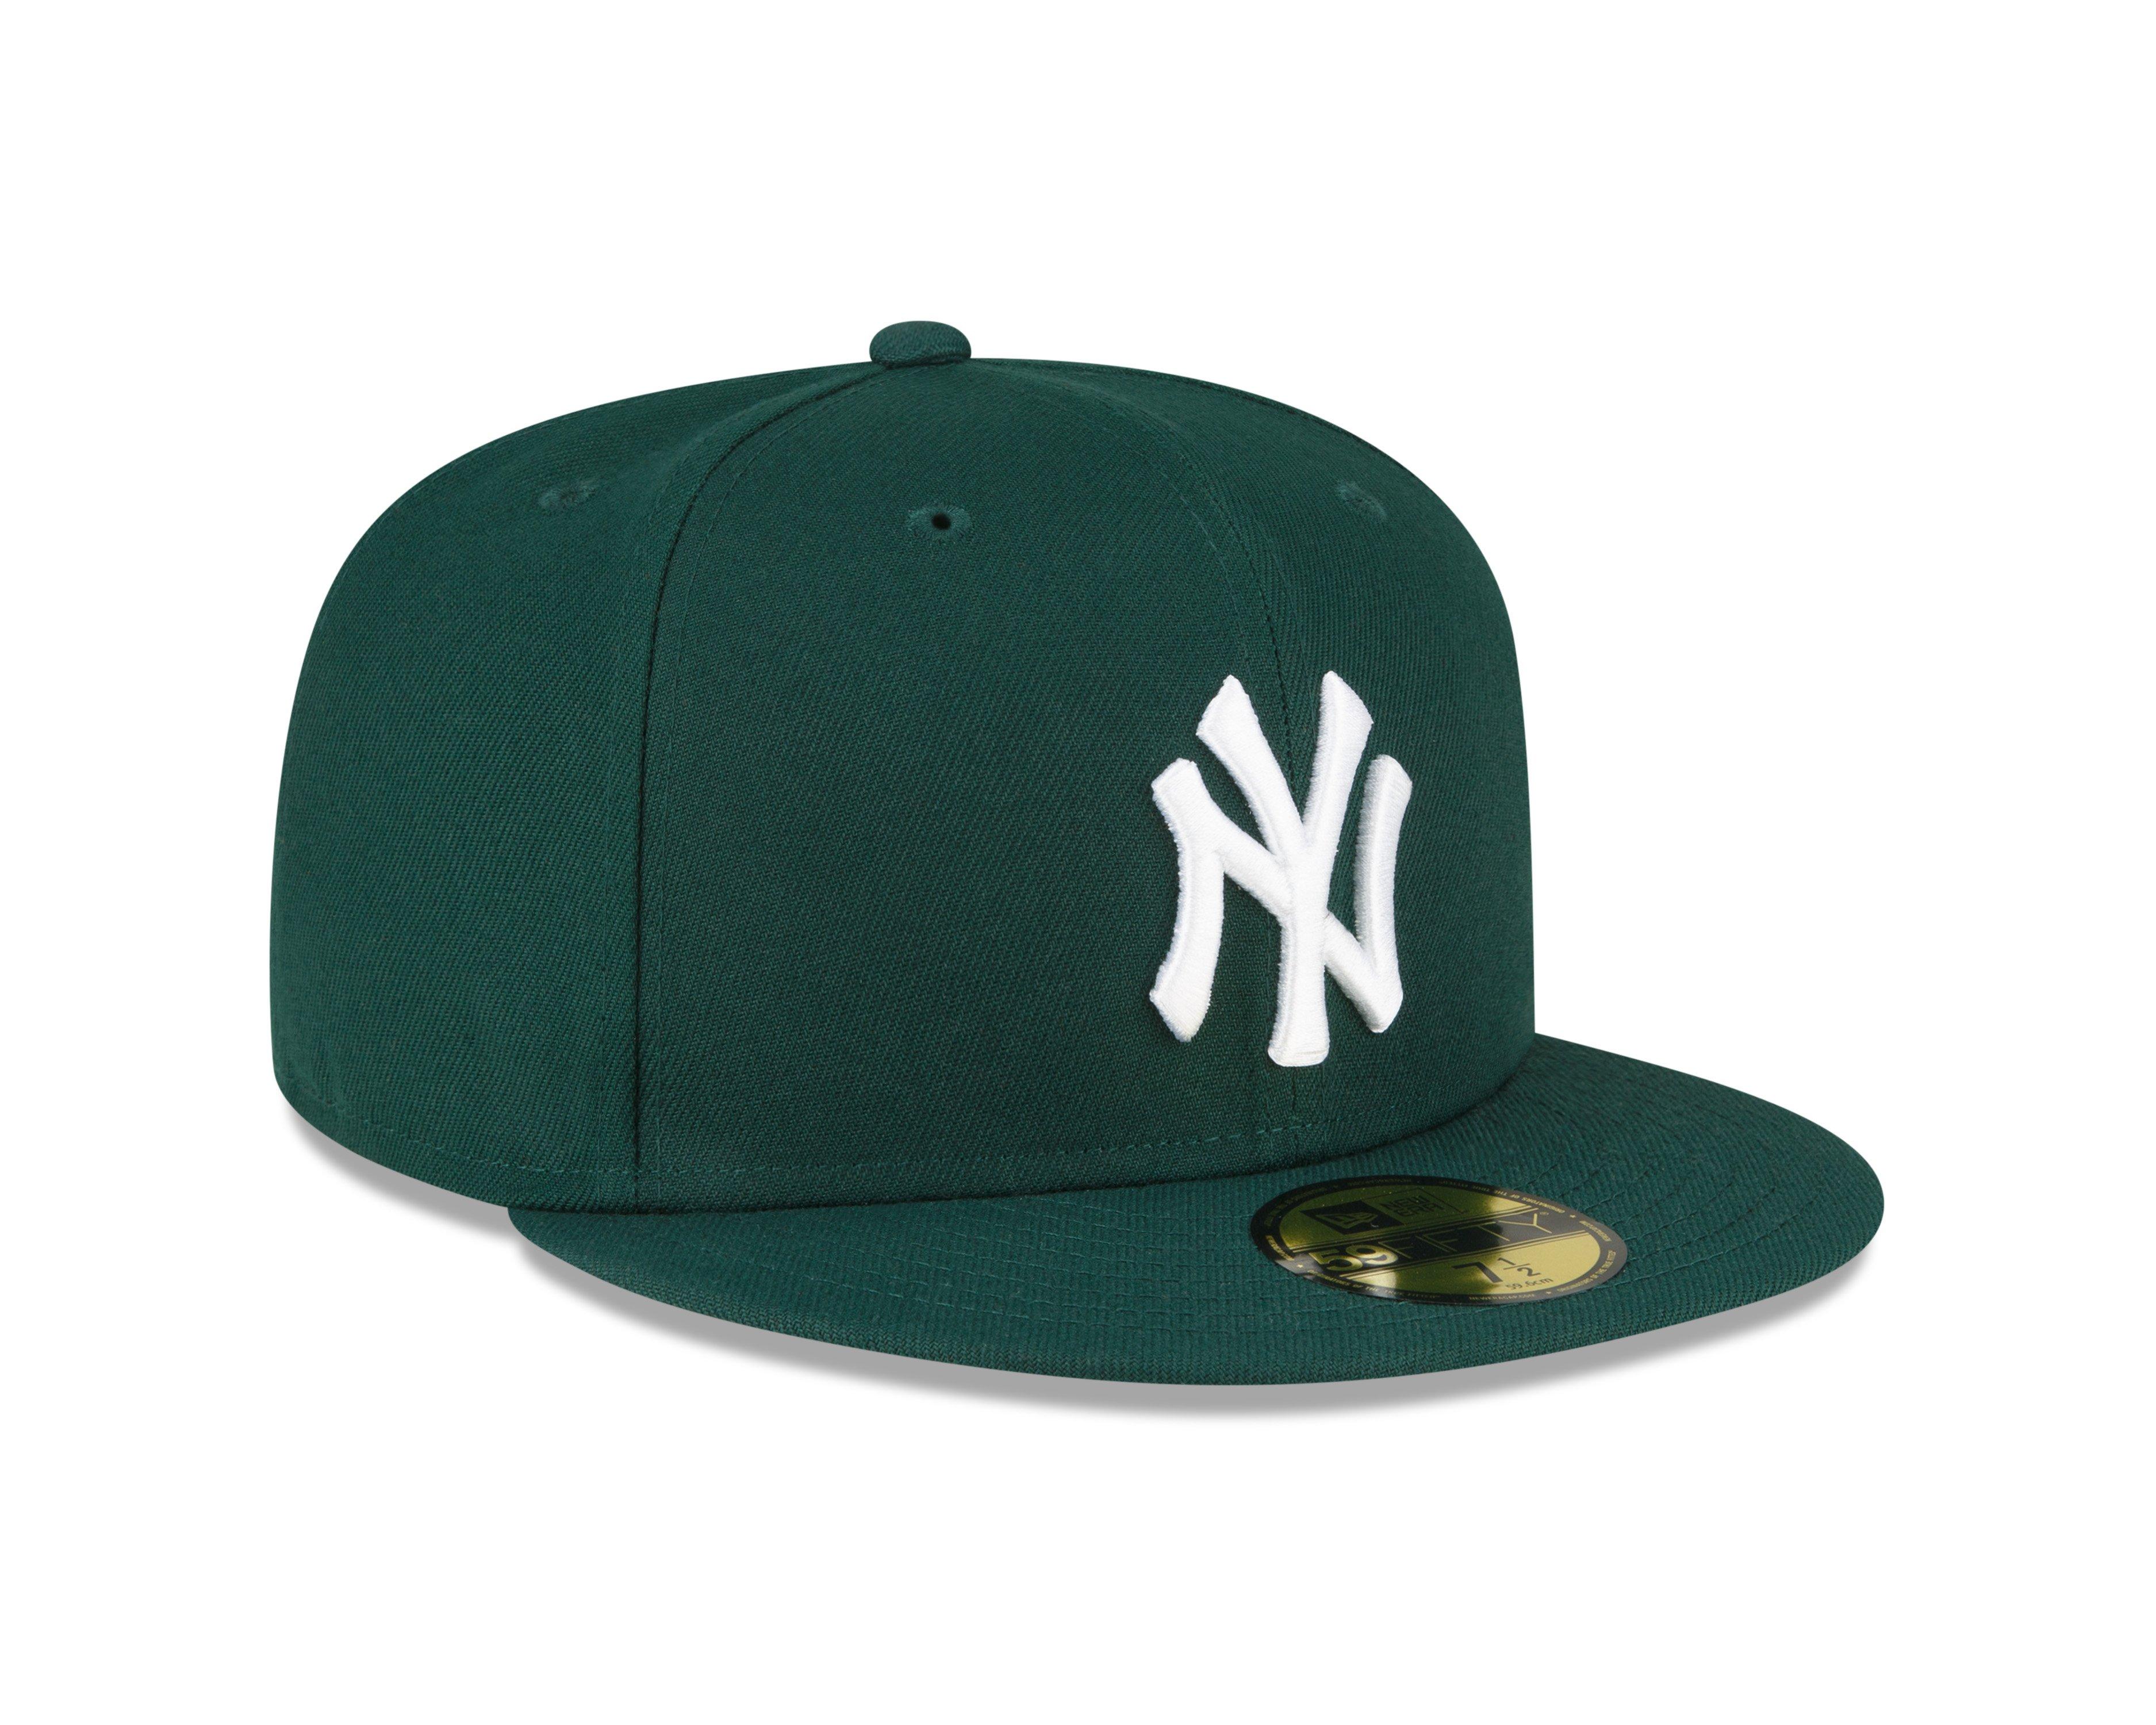 New Era New York Yankees Dark Green Basic 59FIFTY Fitted Hat